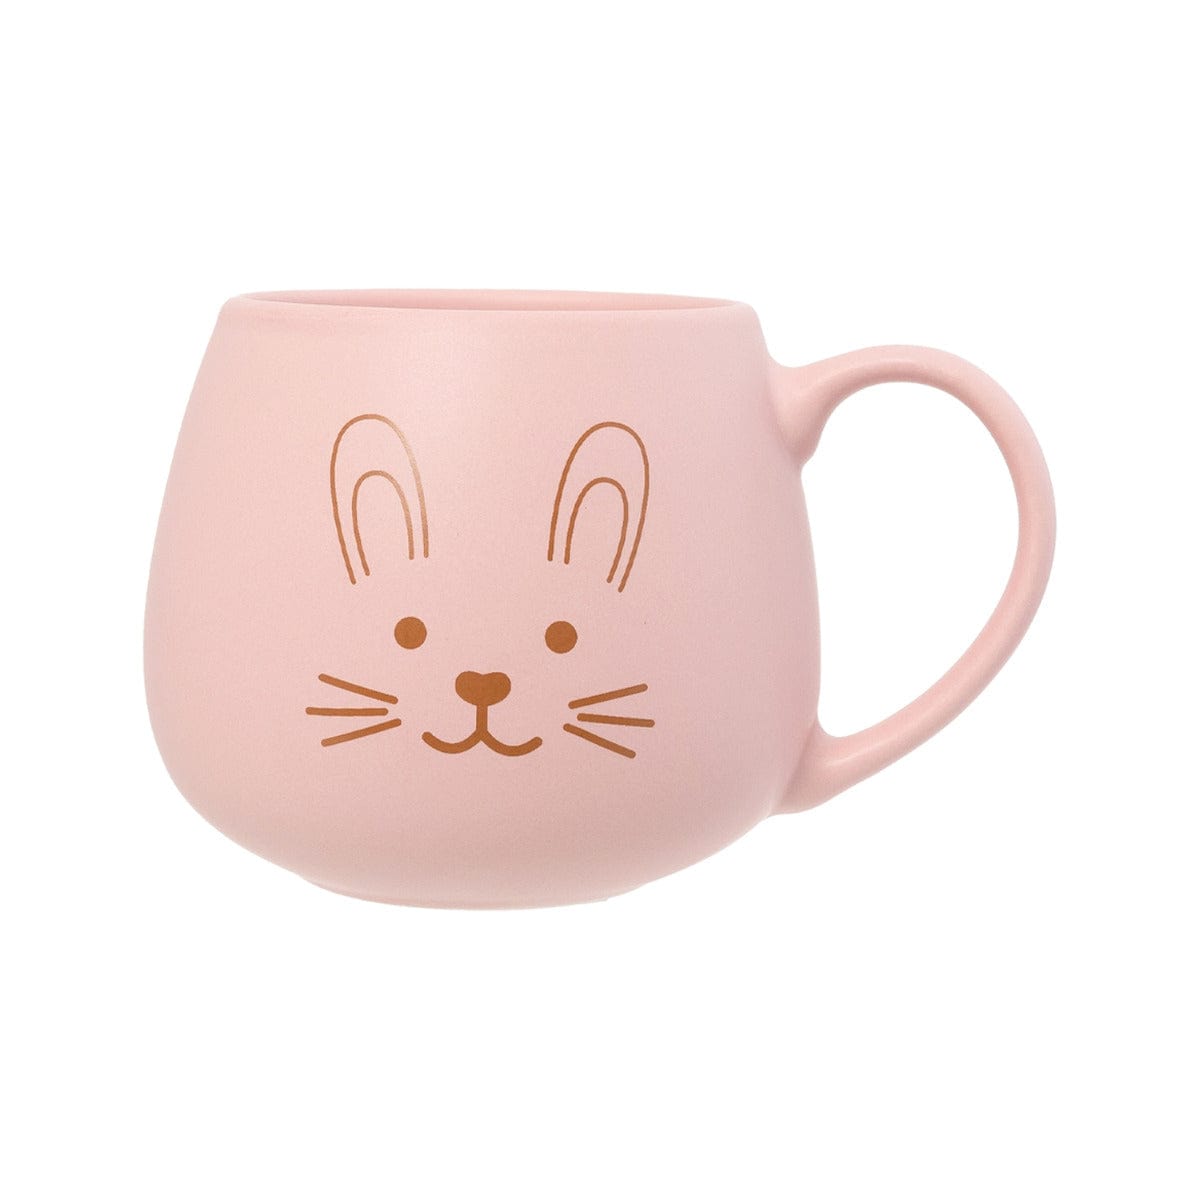 Splosh Accessory Feeding Pink Easter Mug